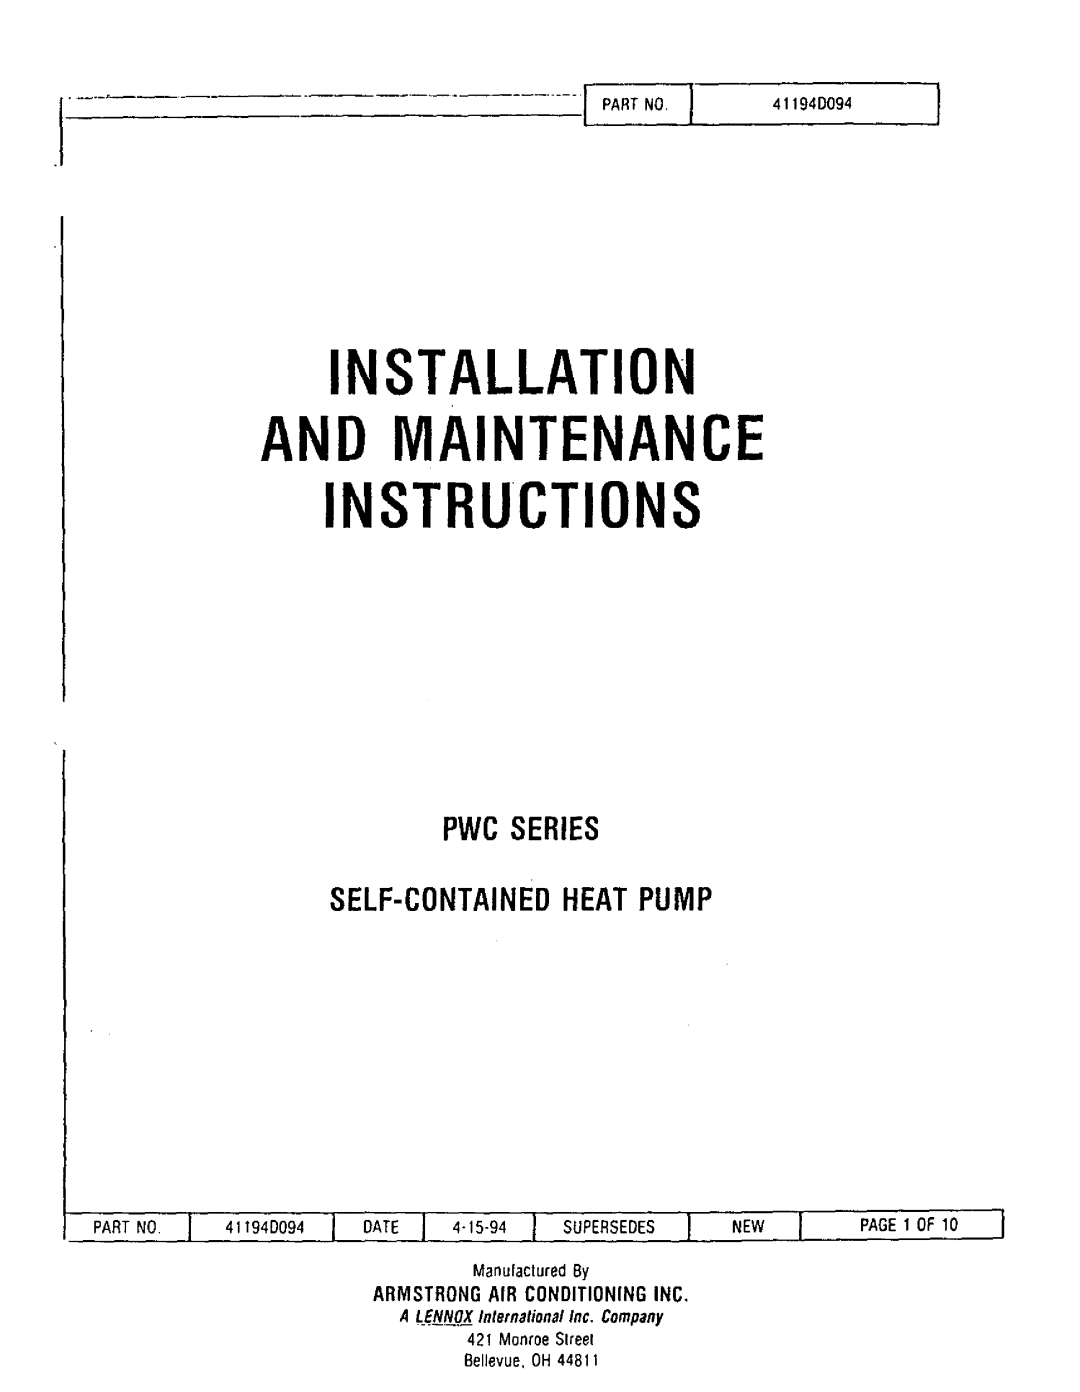 Lennox International Inc PWGI8E7.2, PWC24E9.2, PWC302 Idnstallation, An Maintenance, Instructions, PA...I o, .,,9.o09.I 